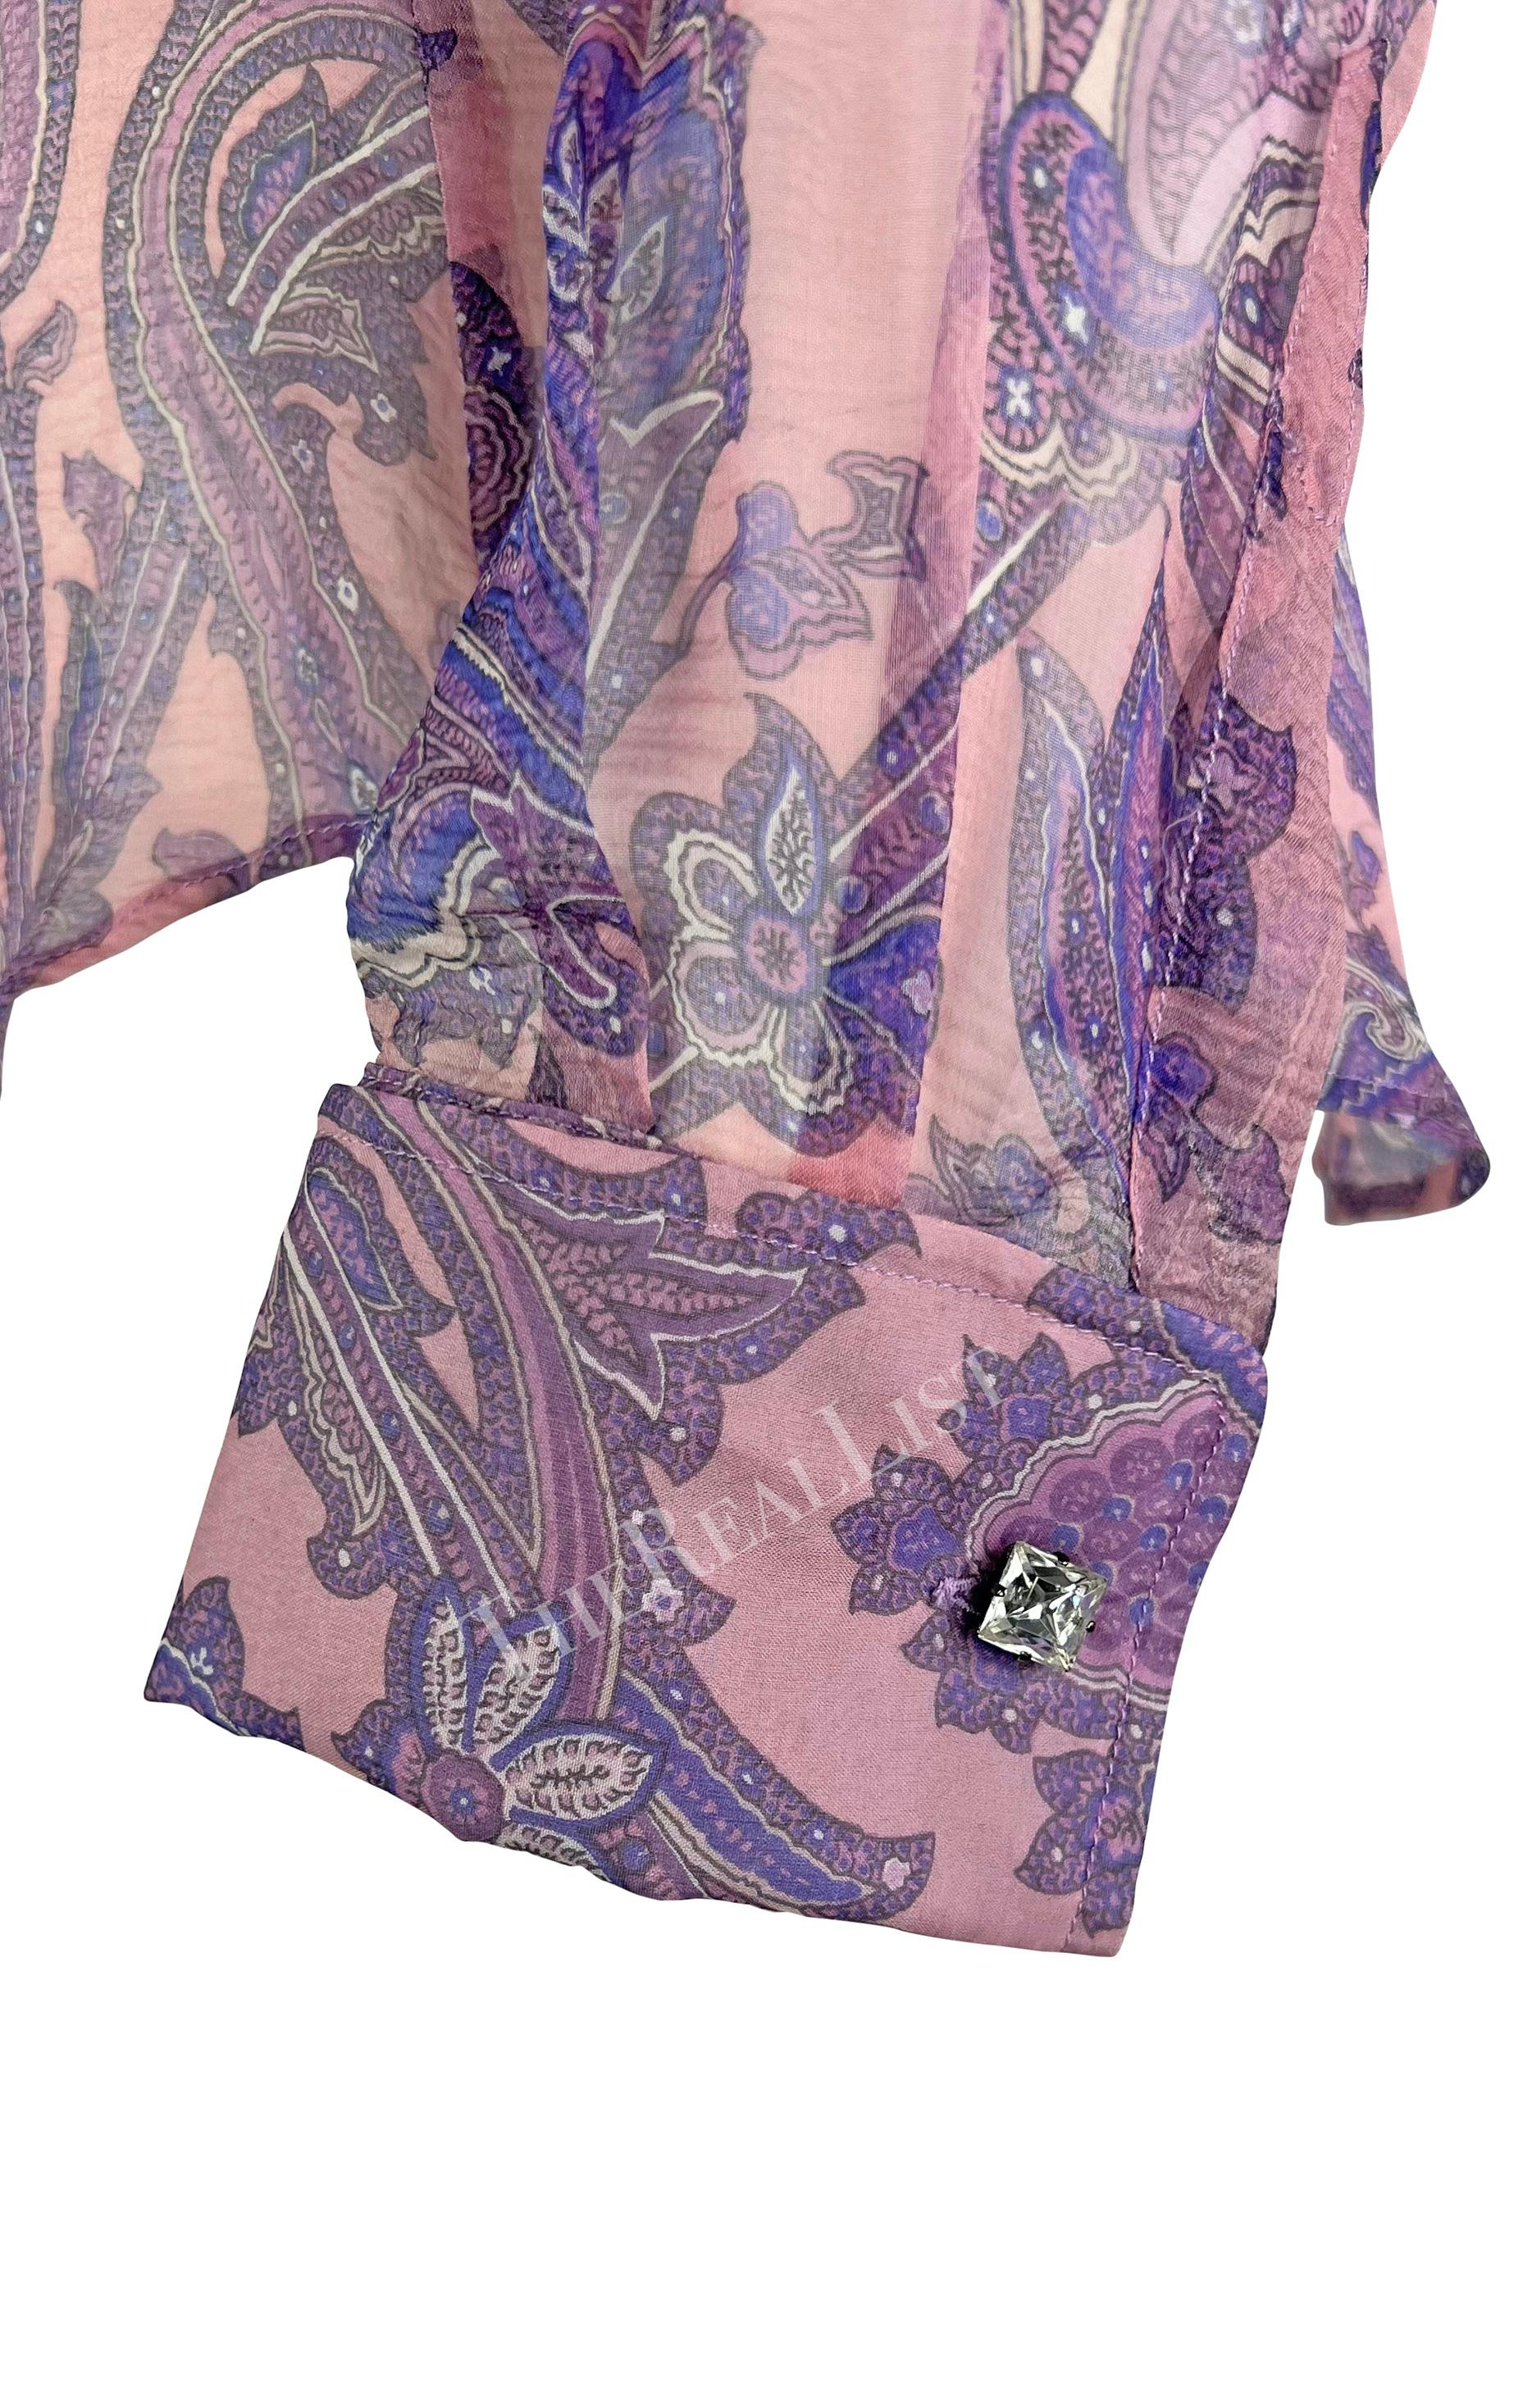 S/S 2000 Dolce & Gabbana Purple Sheer Paisley Runway Button Rhinestone Cuff Top For Sale 3